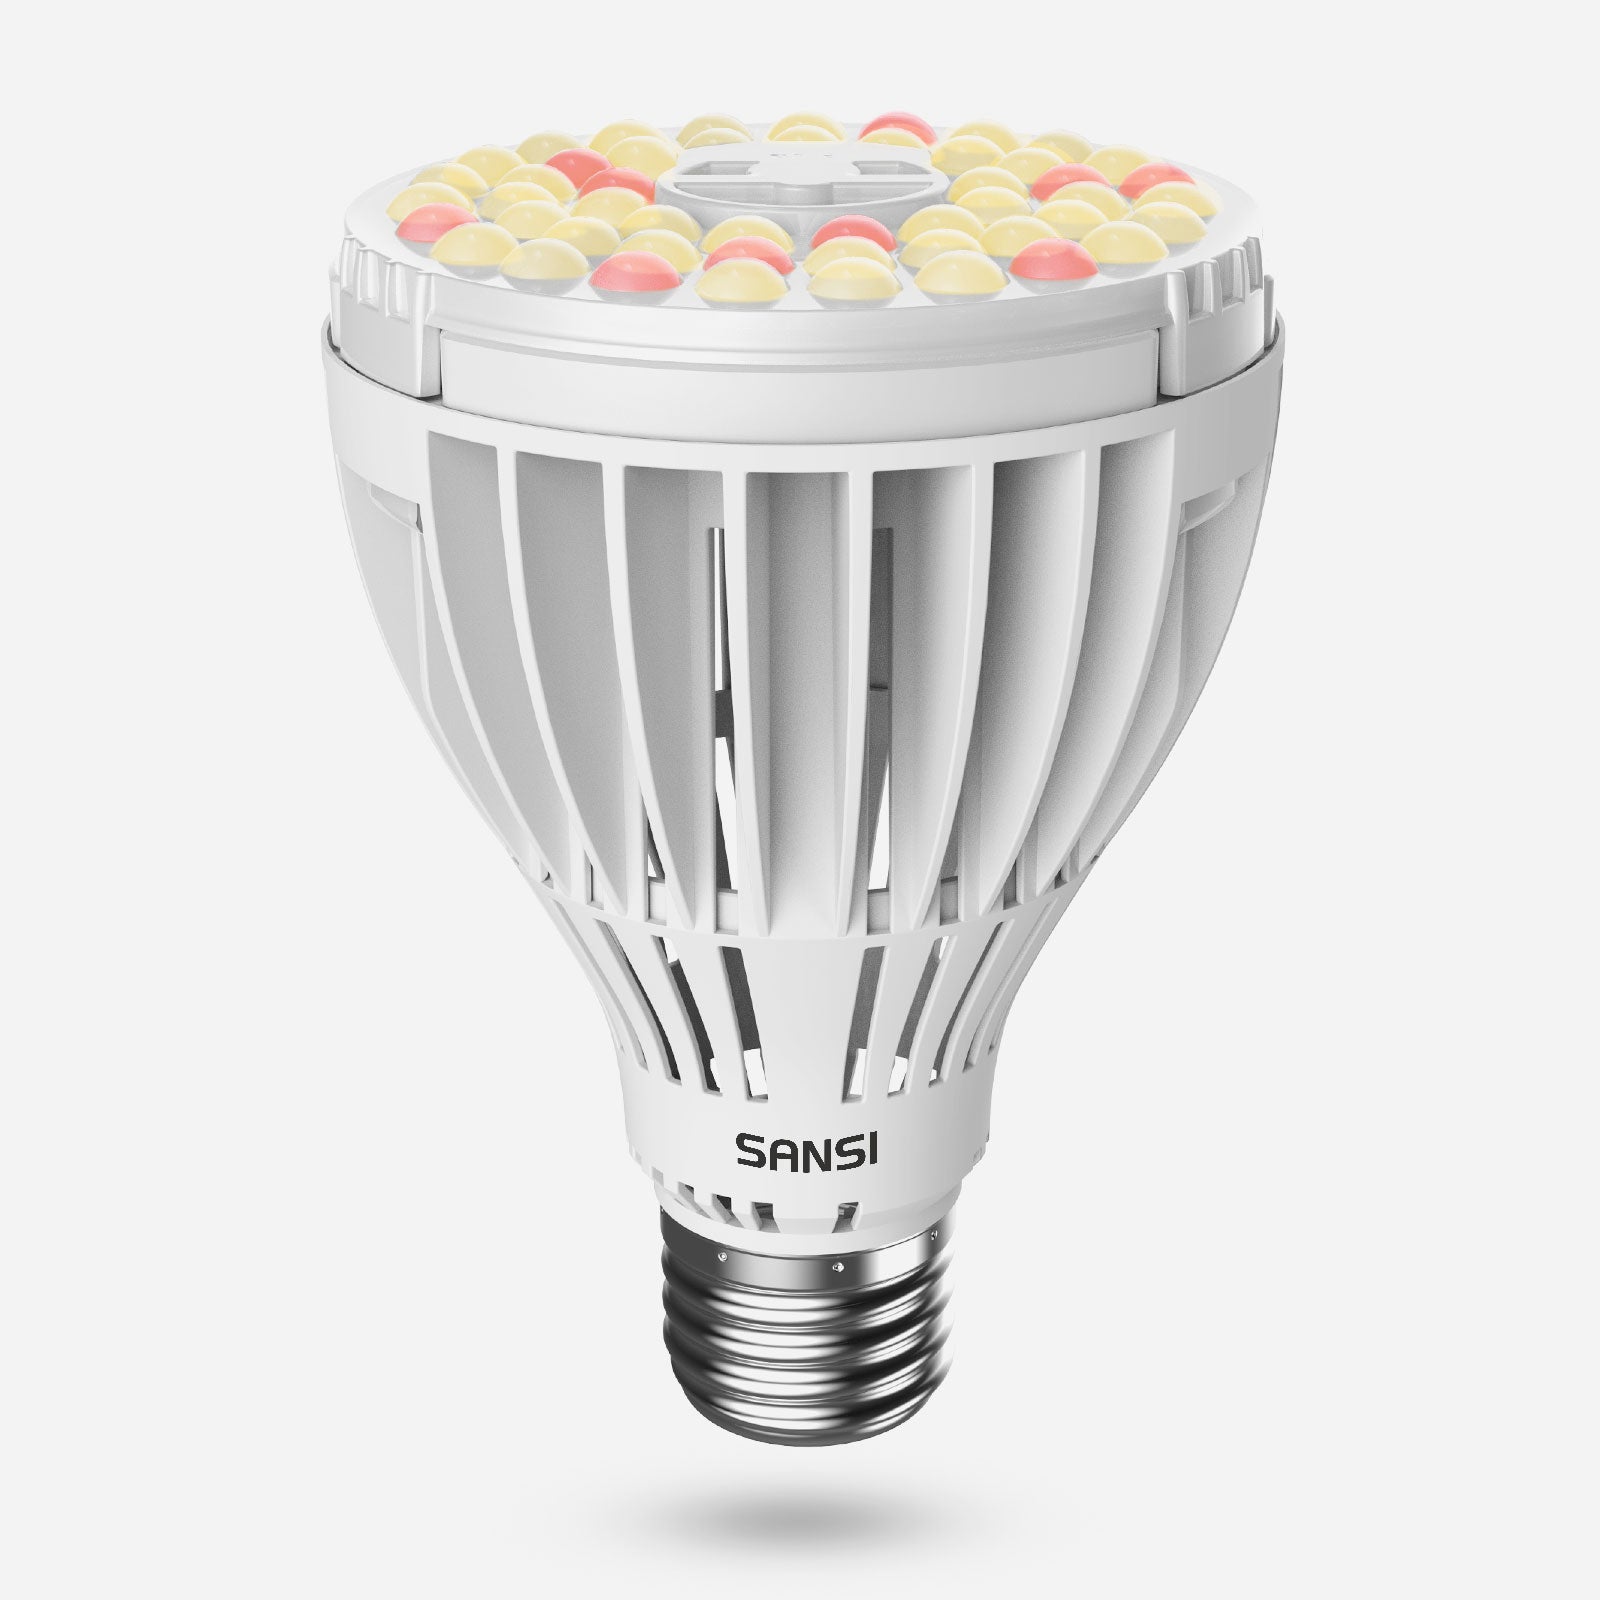 PAR25 30W Led Grow Light Bulb (US ONLY)